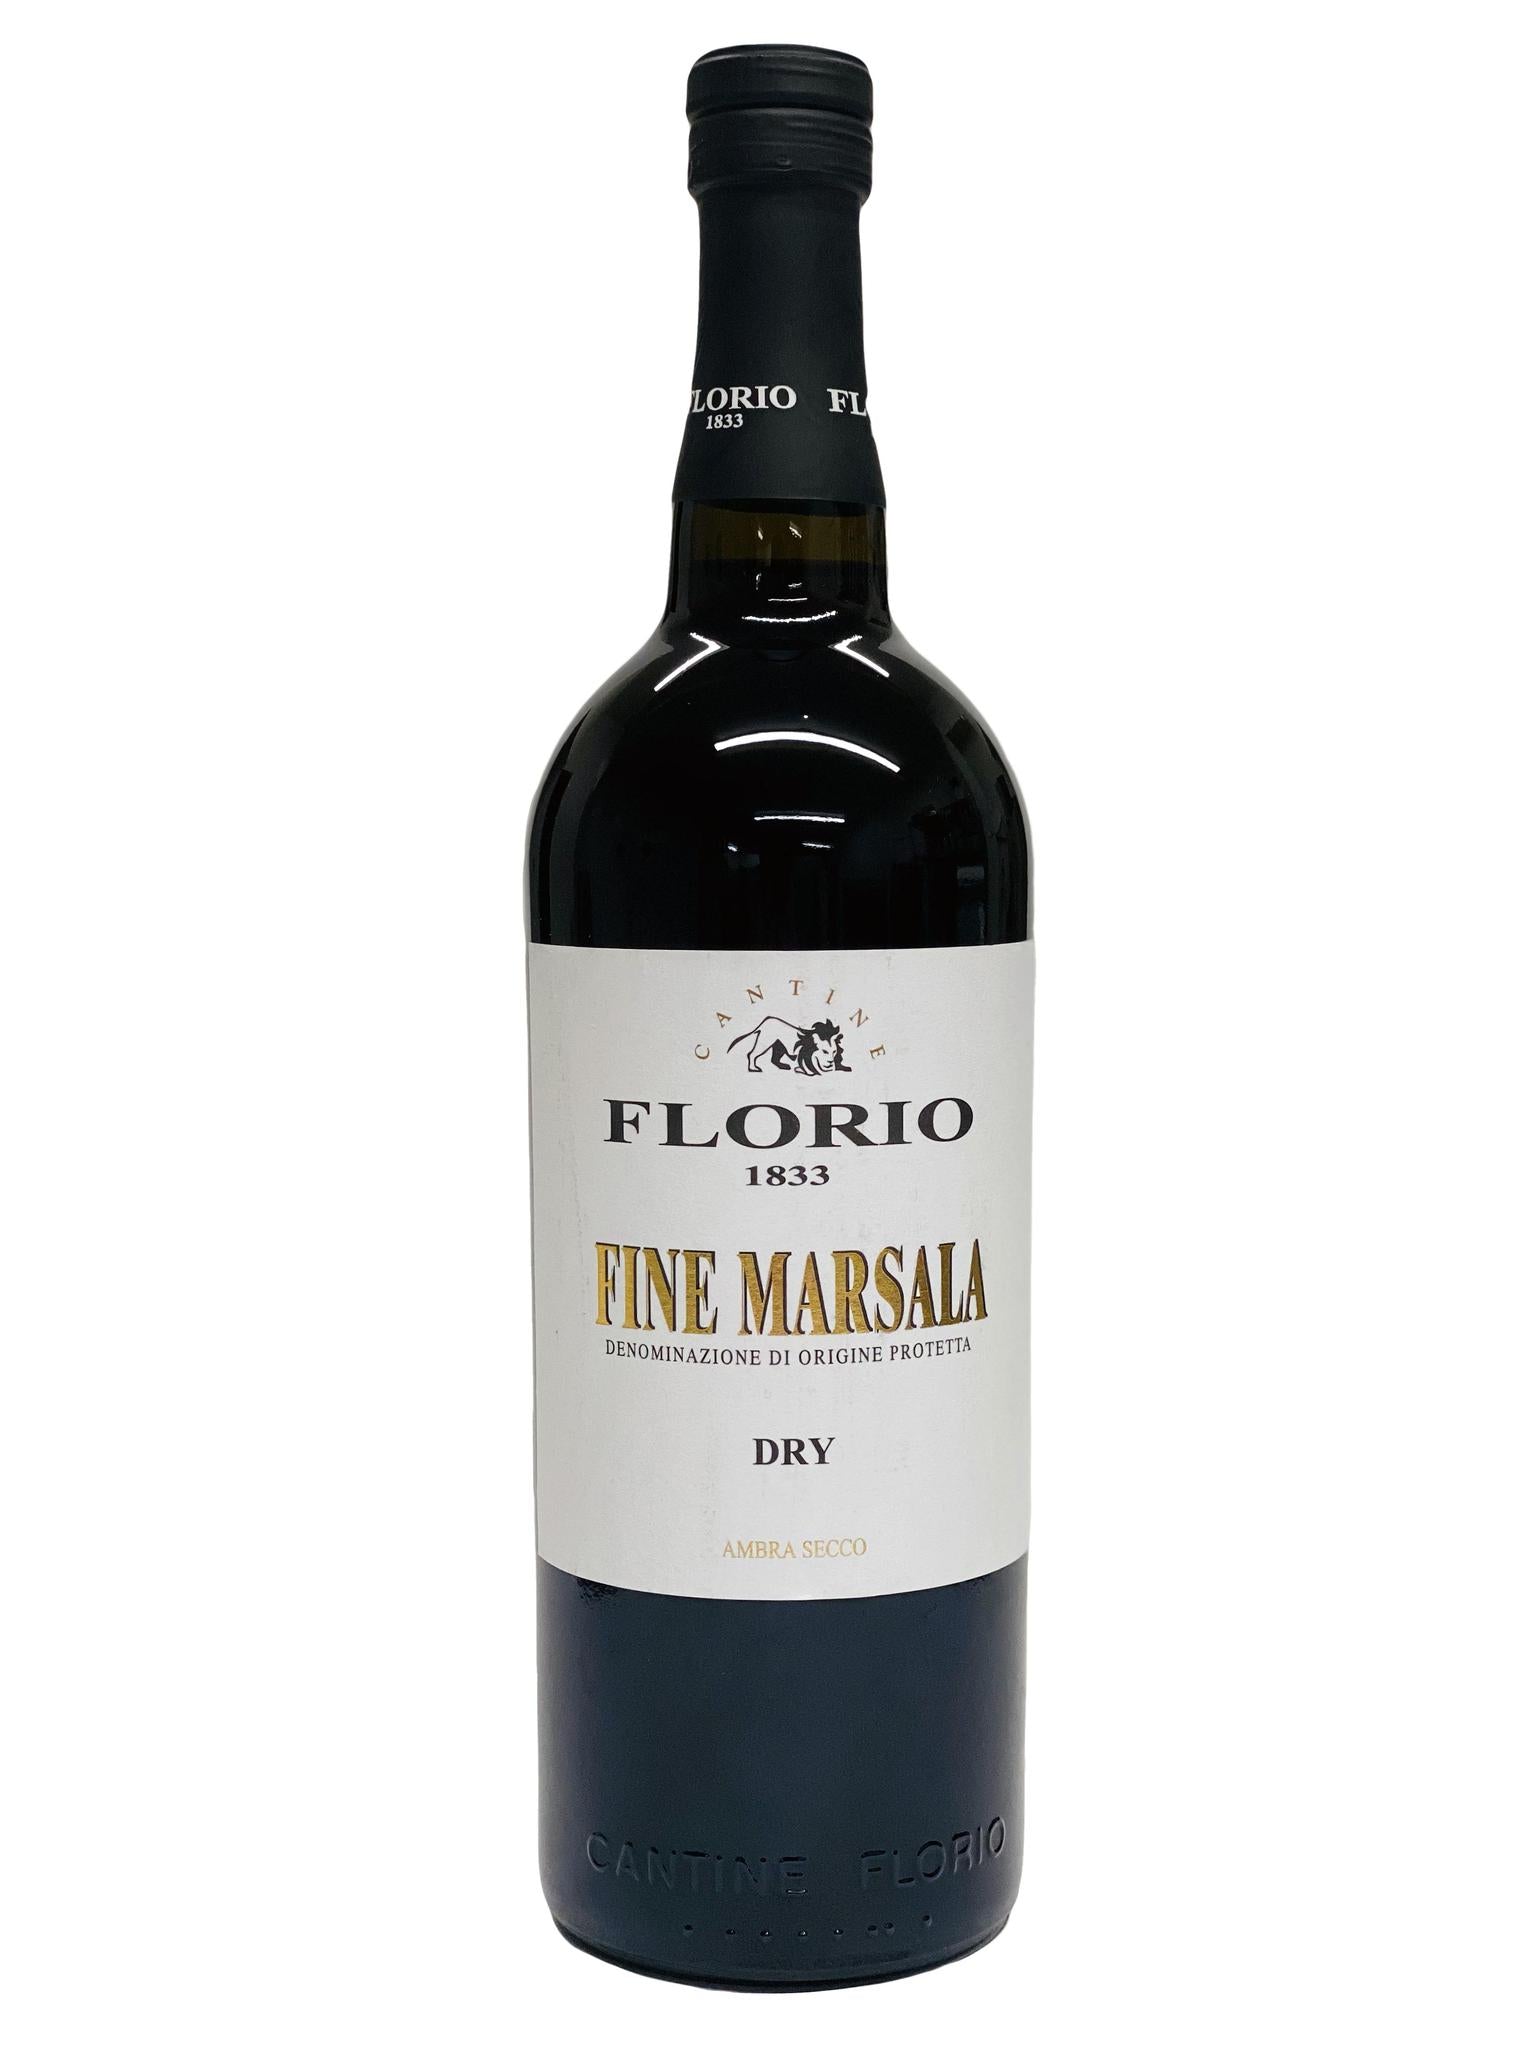 What Is Marsala Wine?